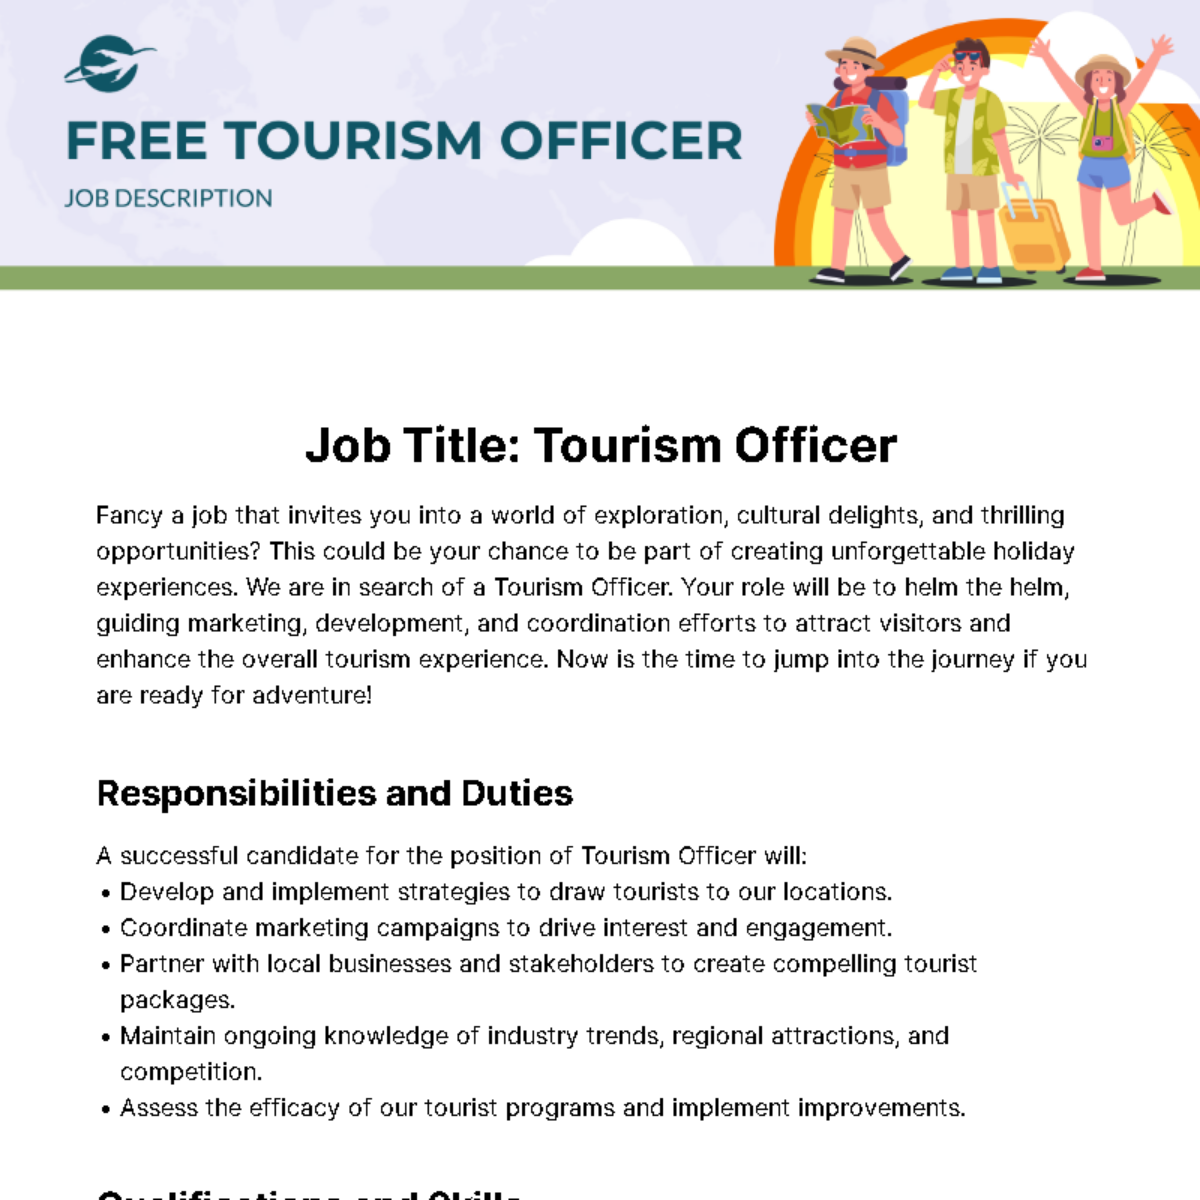 Free Tourism Officer Job Description Template